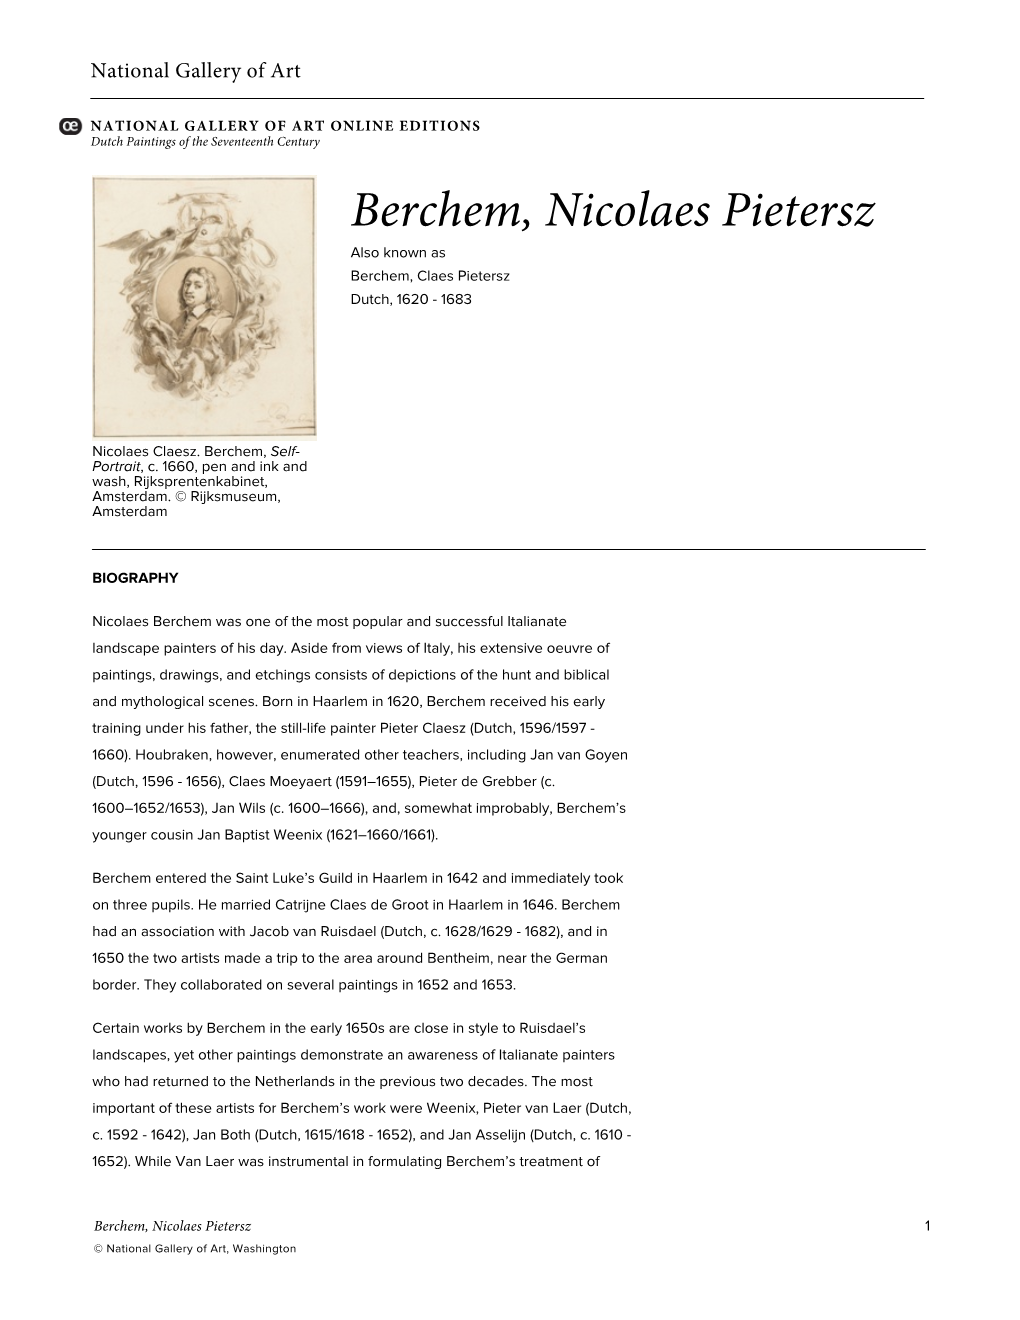 Berchem, Nicolaes Pietersz Also Known As Berchem, Claes Pietersz Dutch, 1620 - 1683